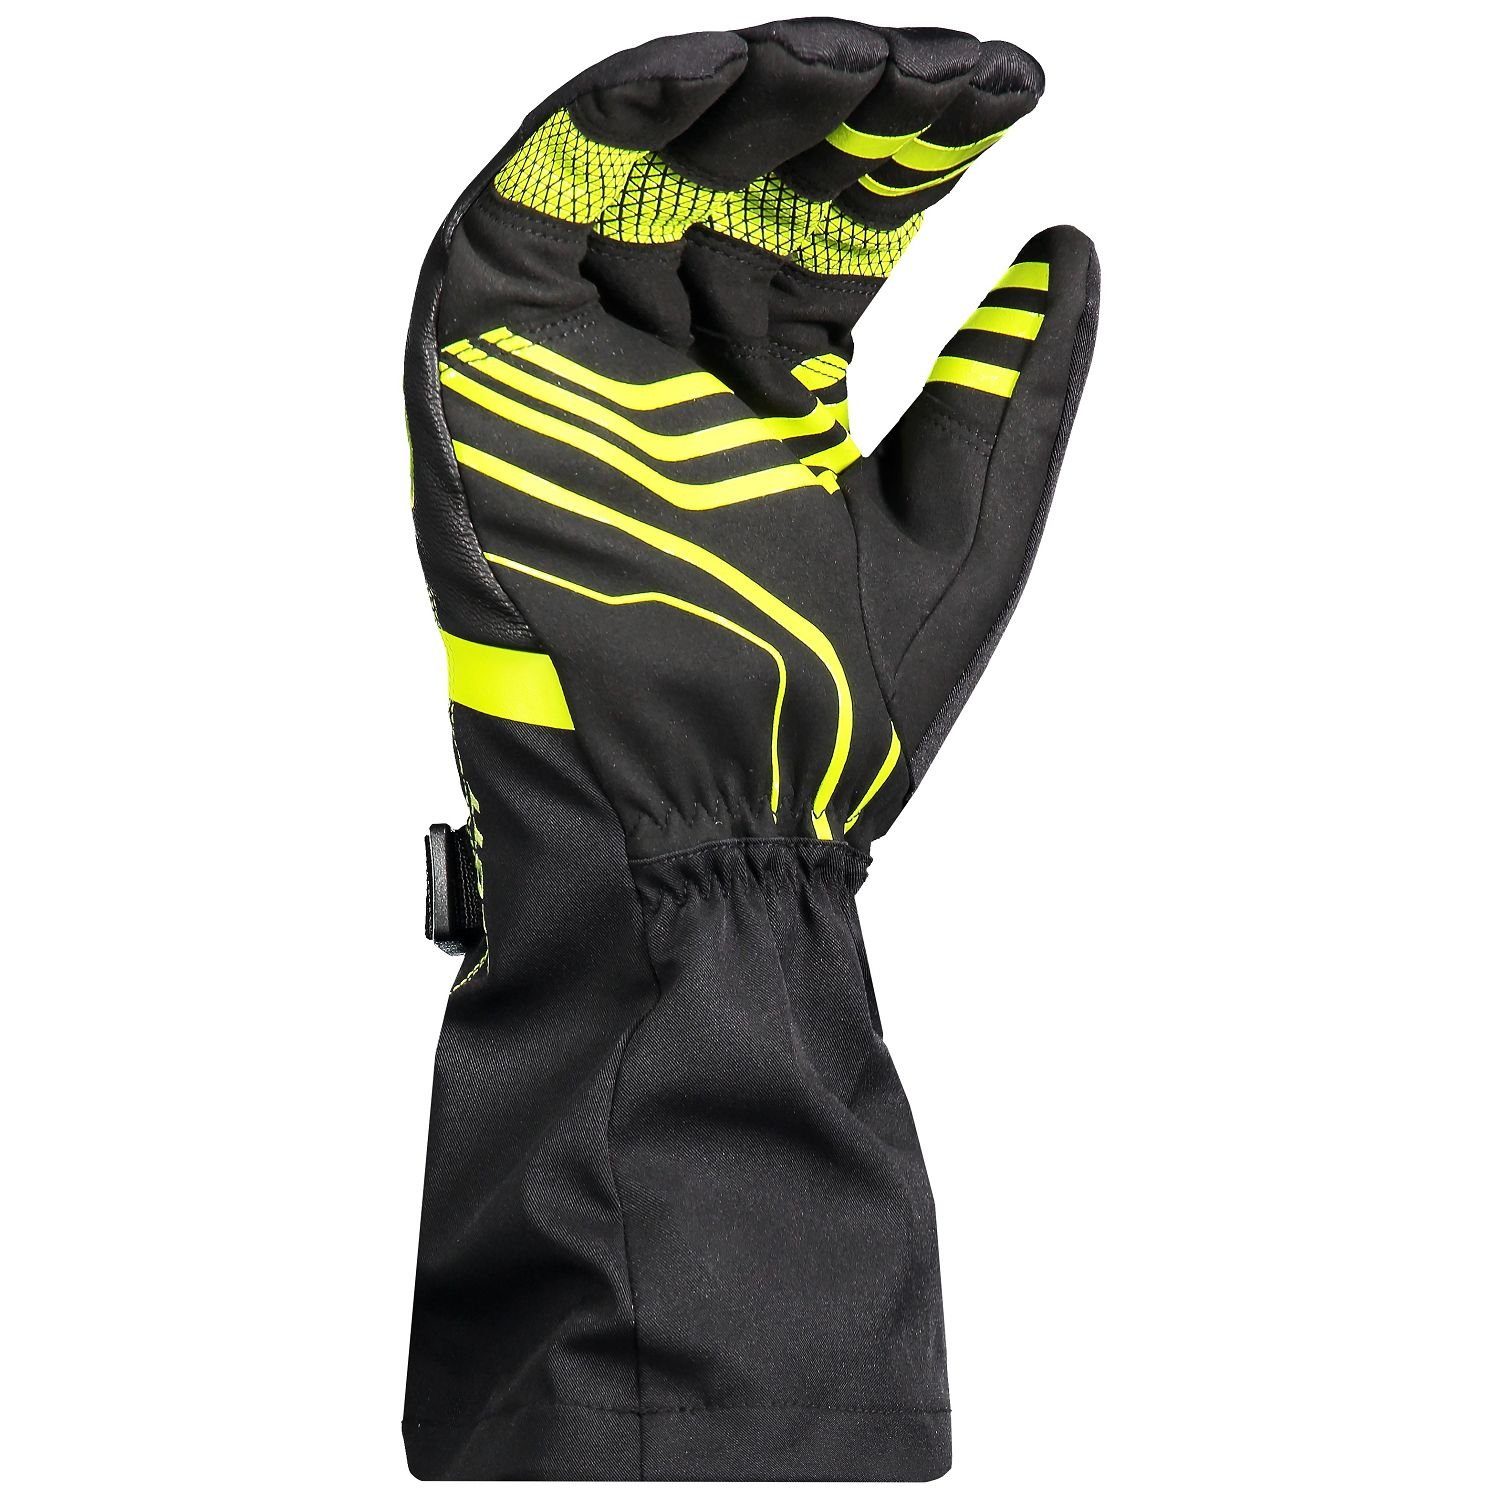 Scott Motorradhandschuhe SCOTT Handschuhe MX schwarz/neongrün Cubrick